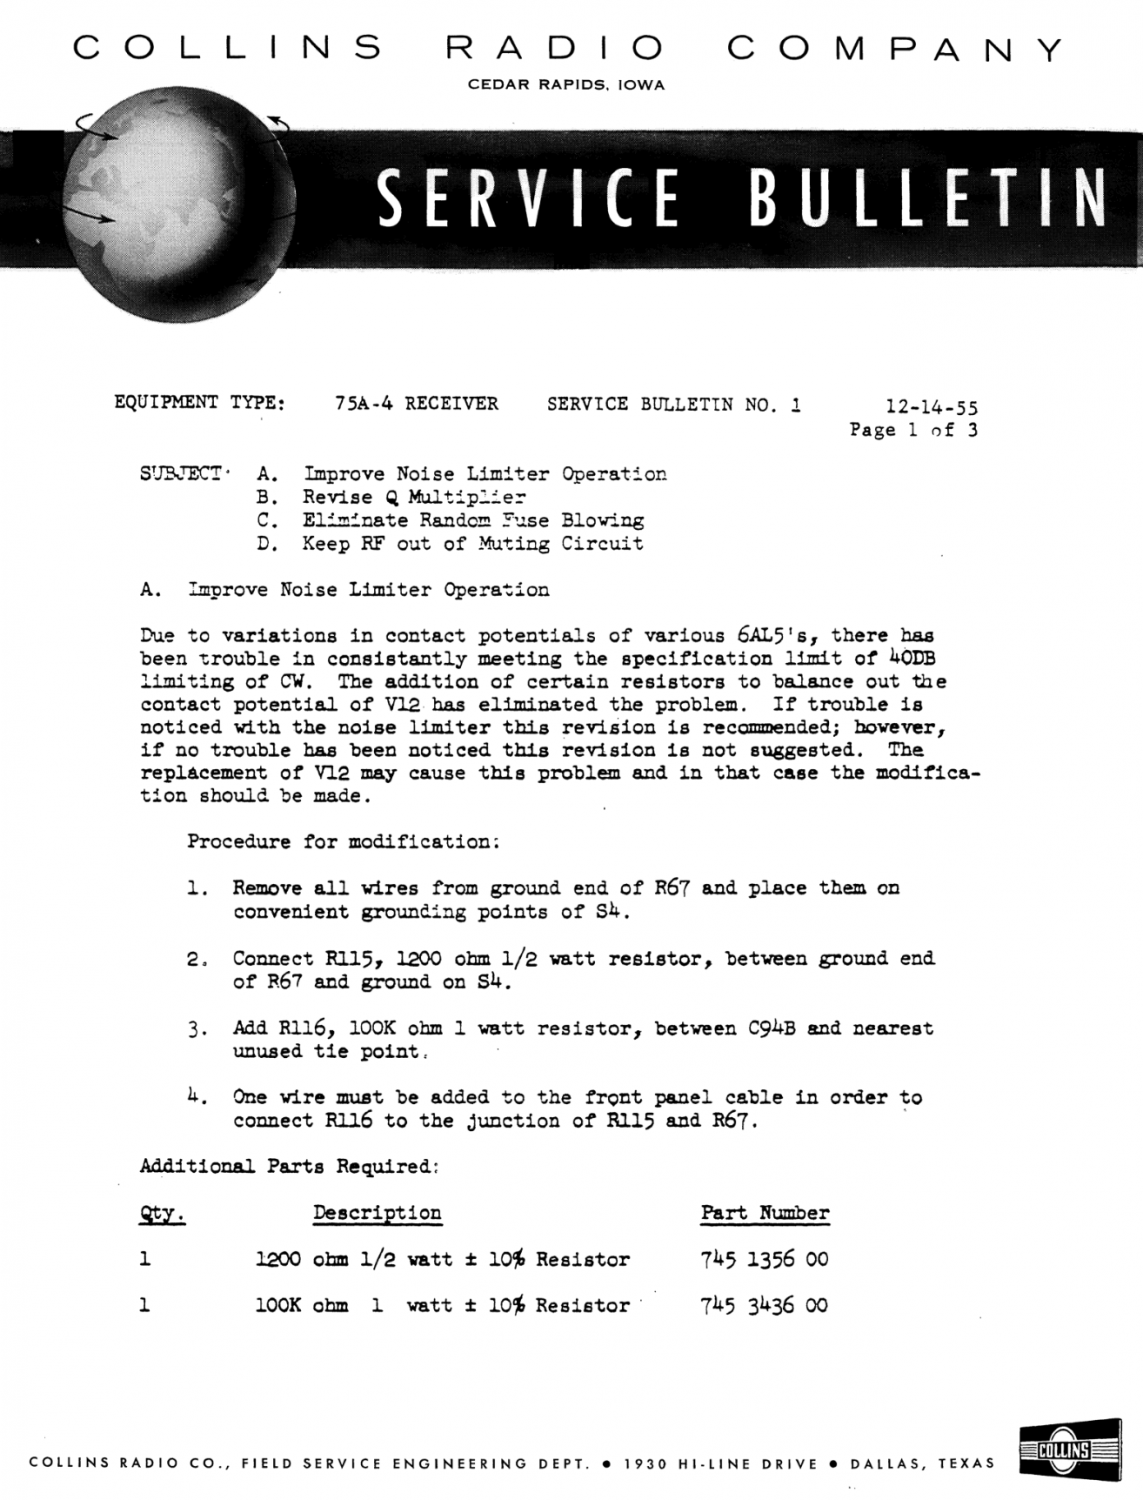 Collins 75A-4 Amateur Band Receiver - Service Bulletin Number 1 - (1955-12)